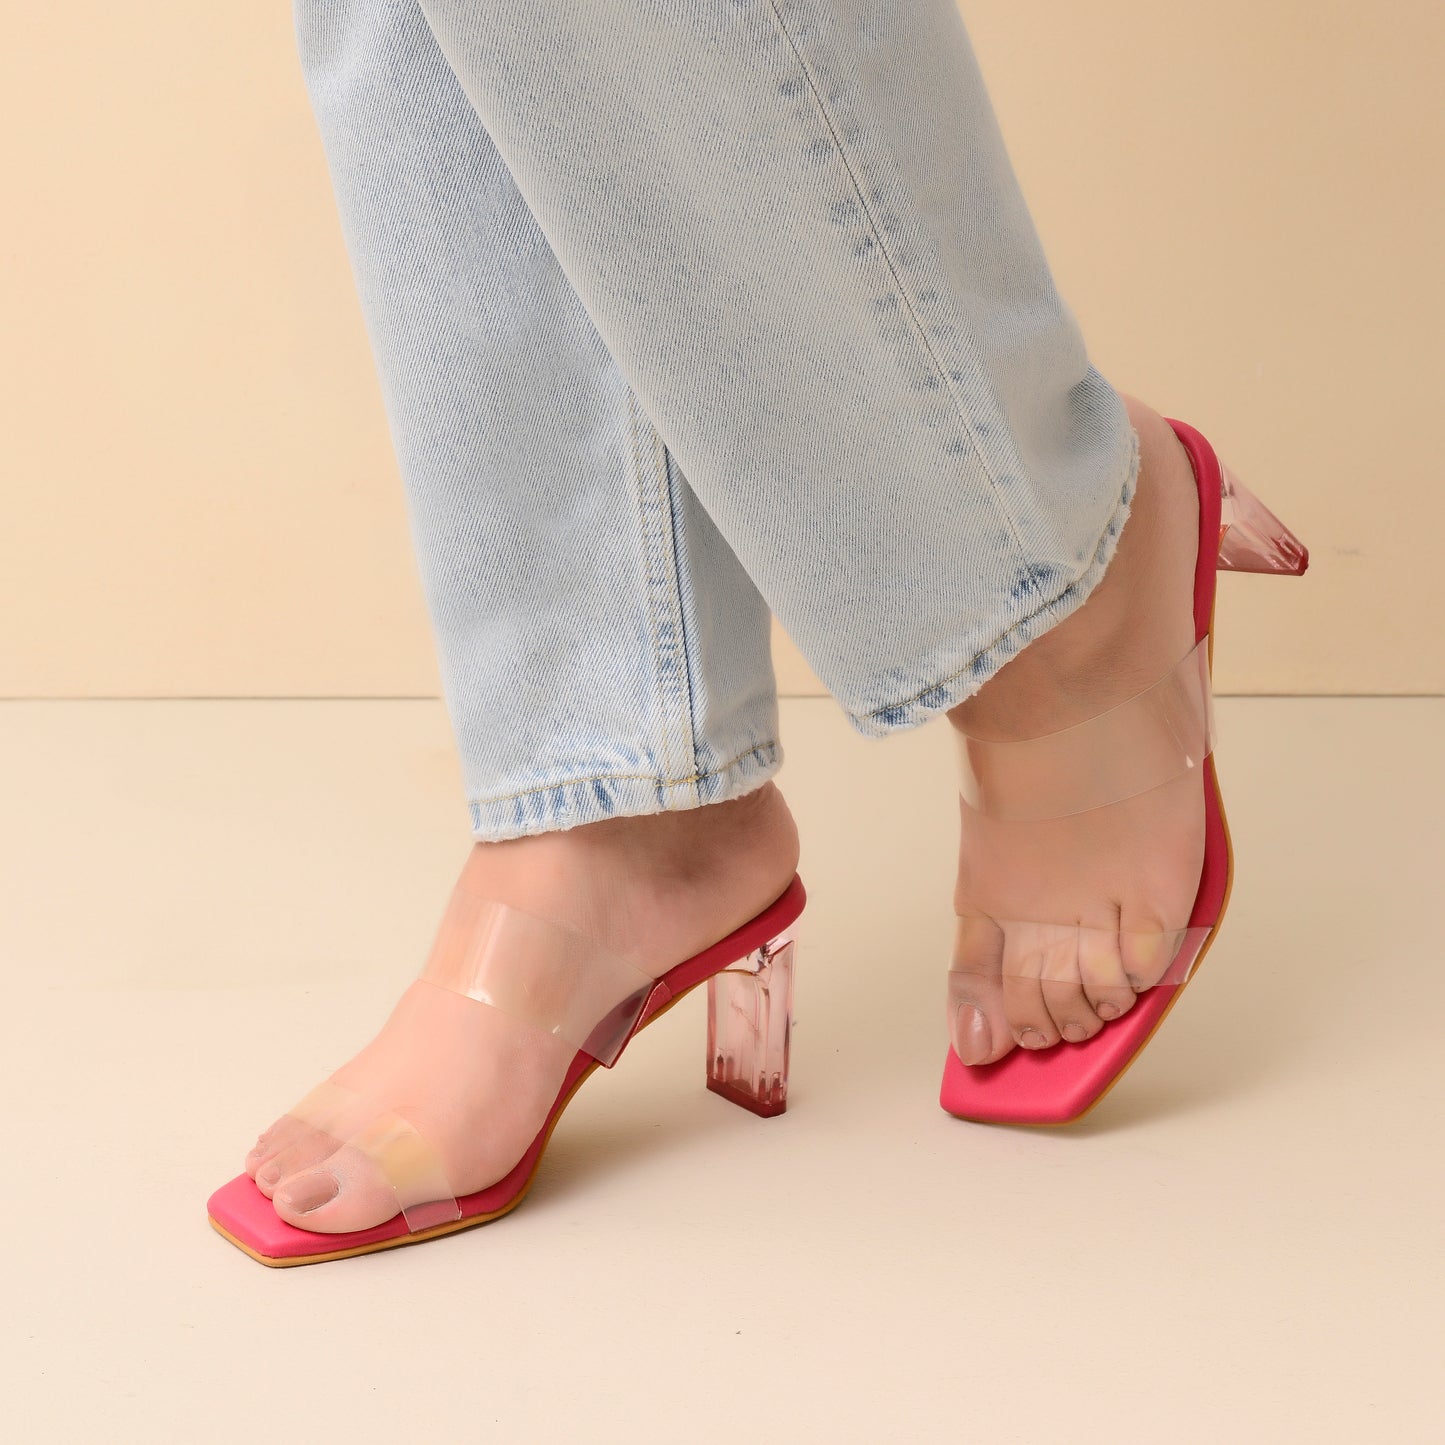 Pink Transparent Heels